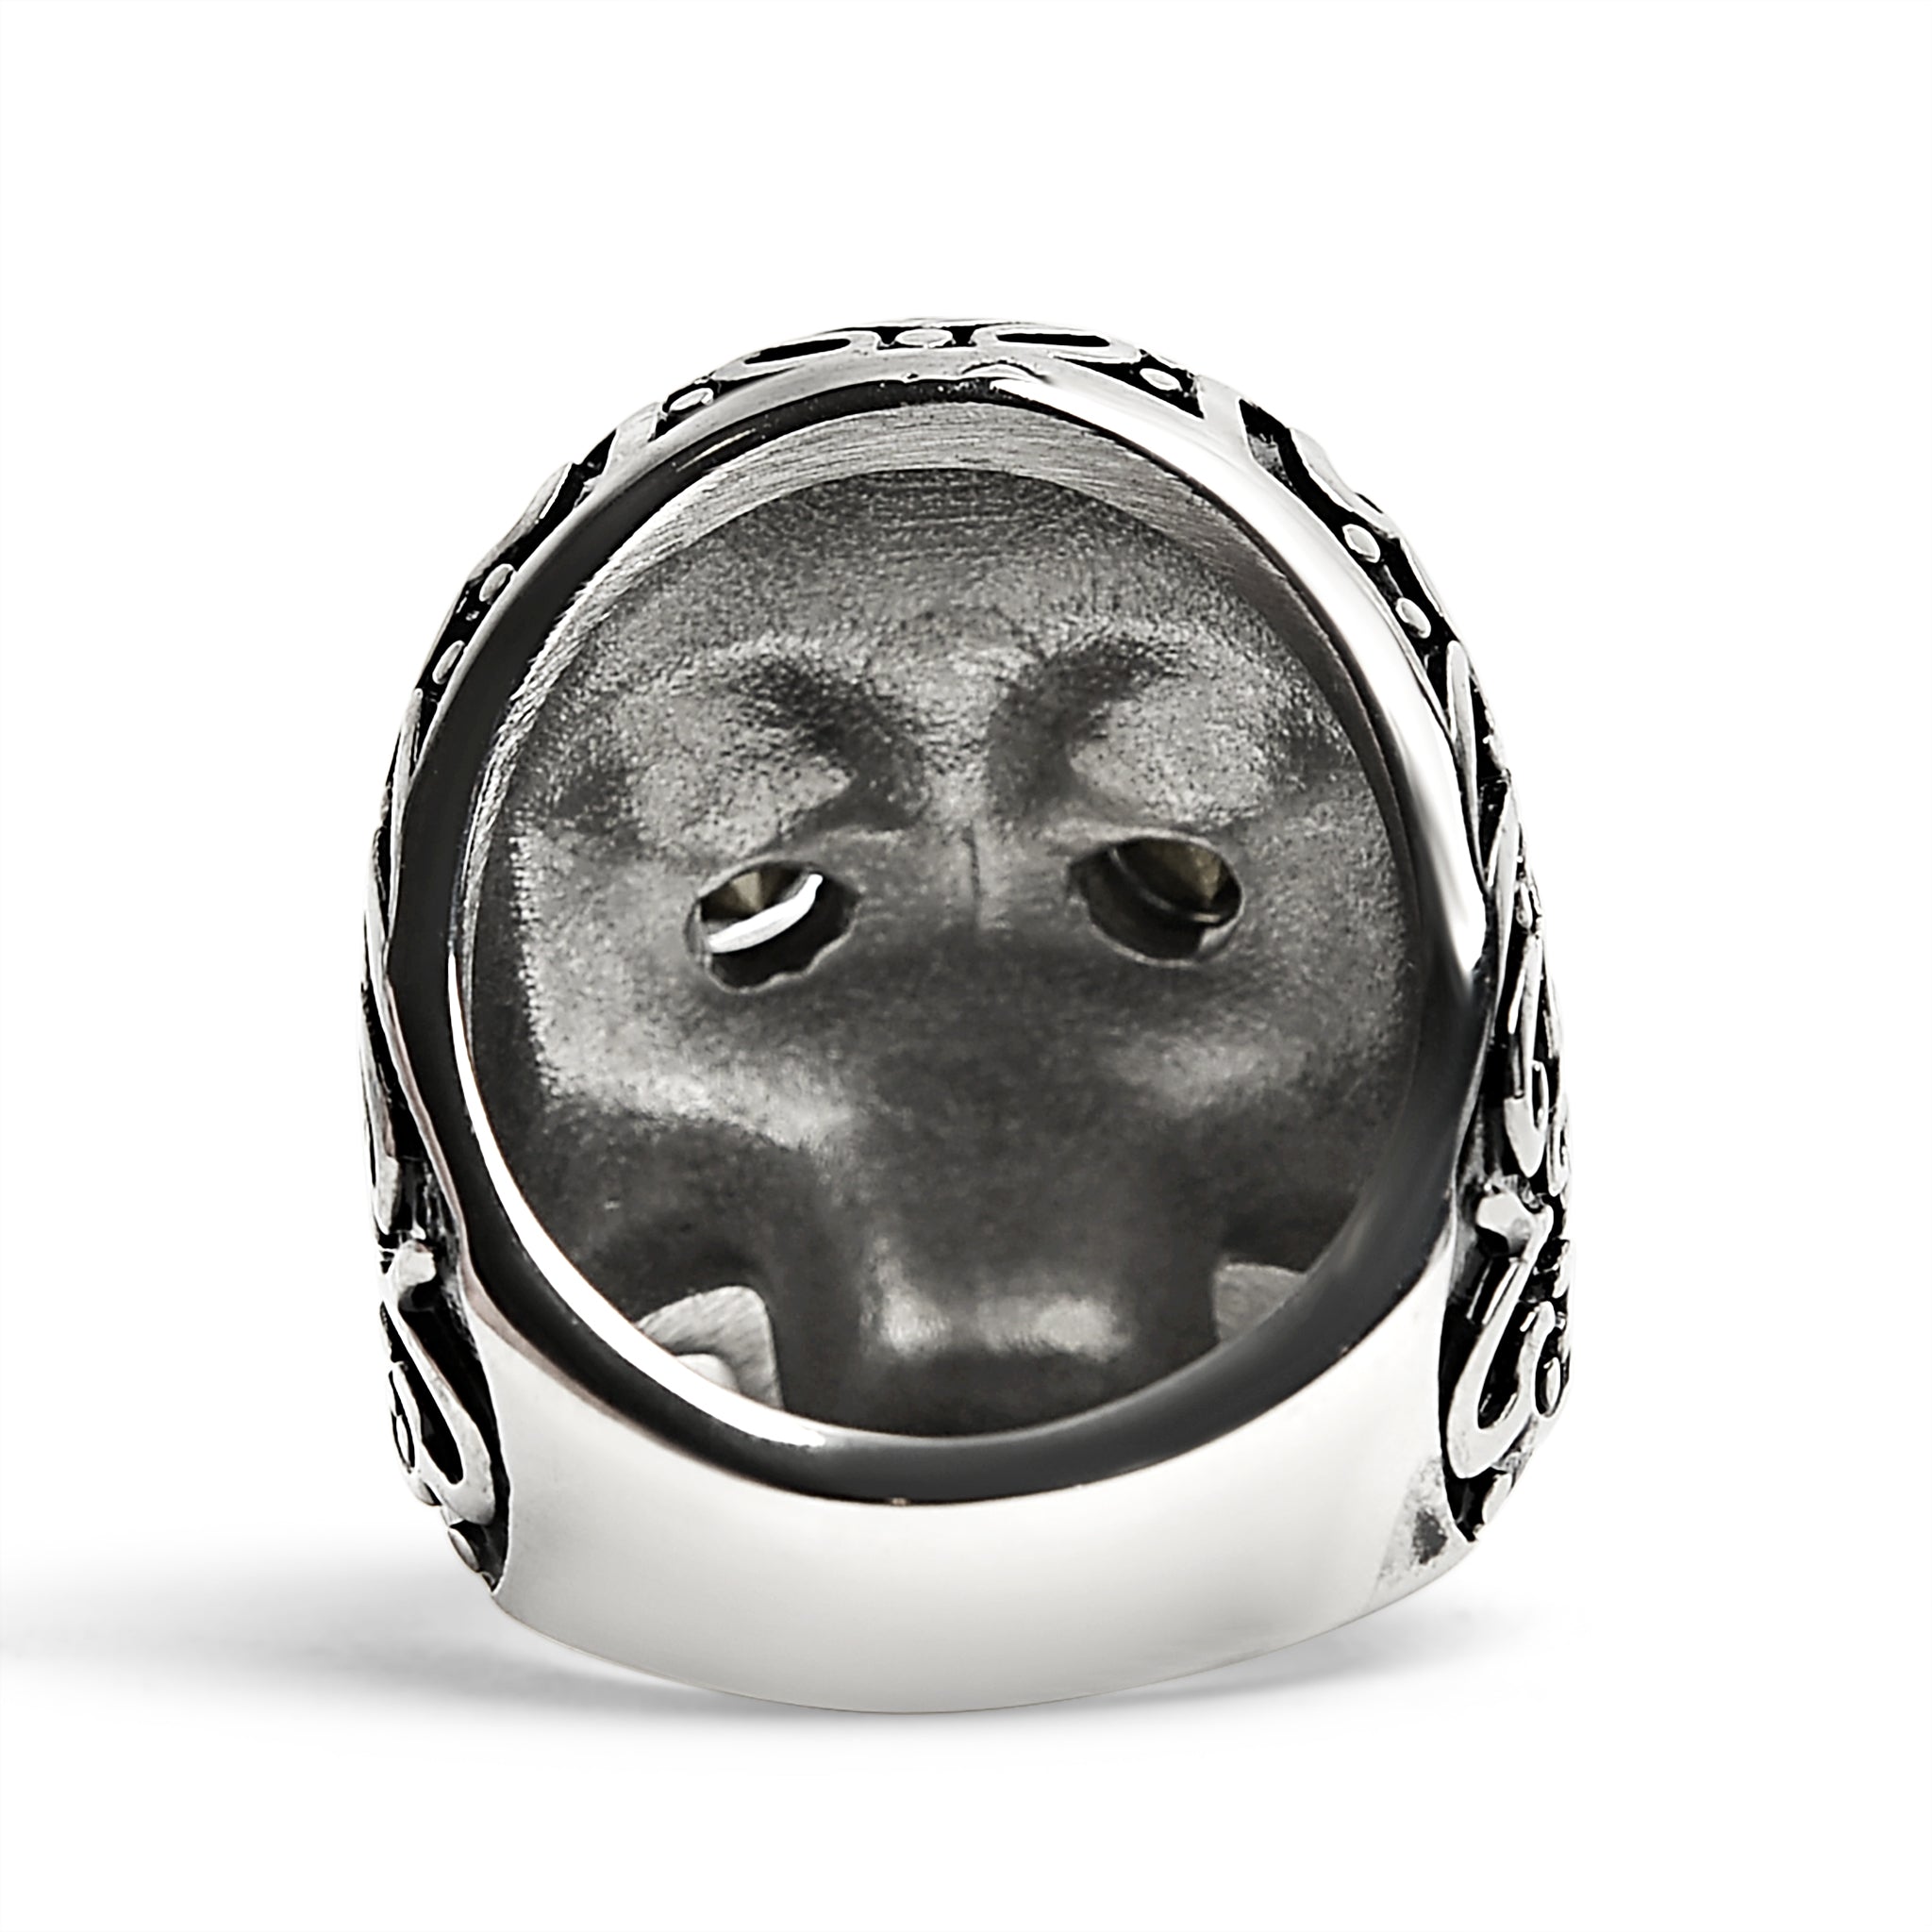 Black CZ Detailed Skull Stainless Steel Ring - Edgy Biker/Goth Accessory Bijou Her